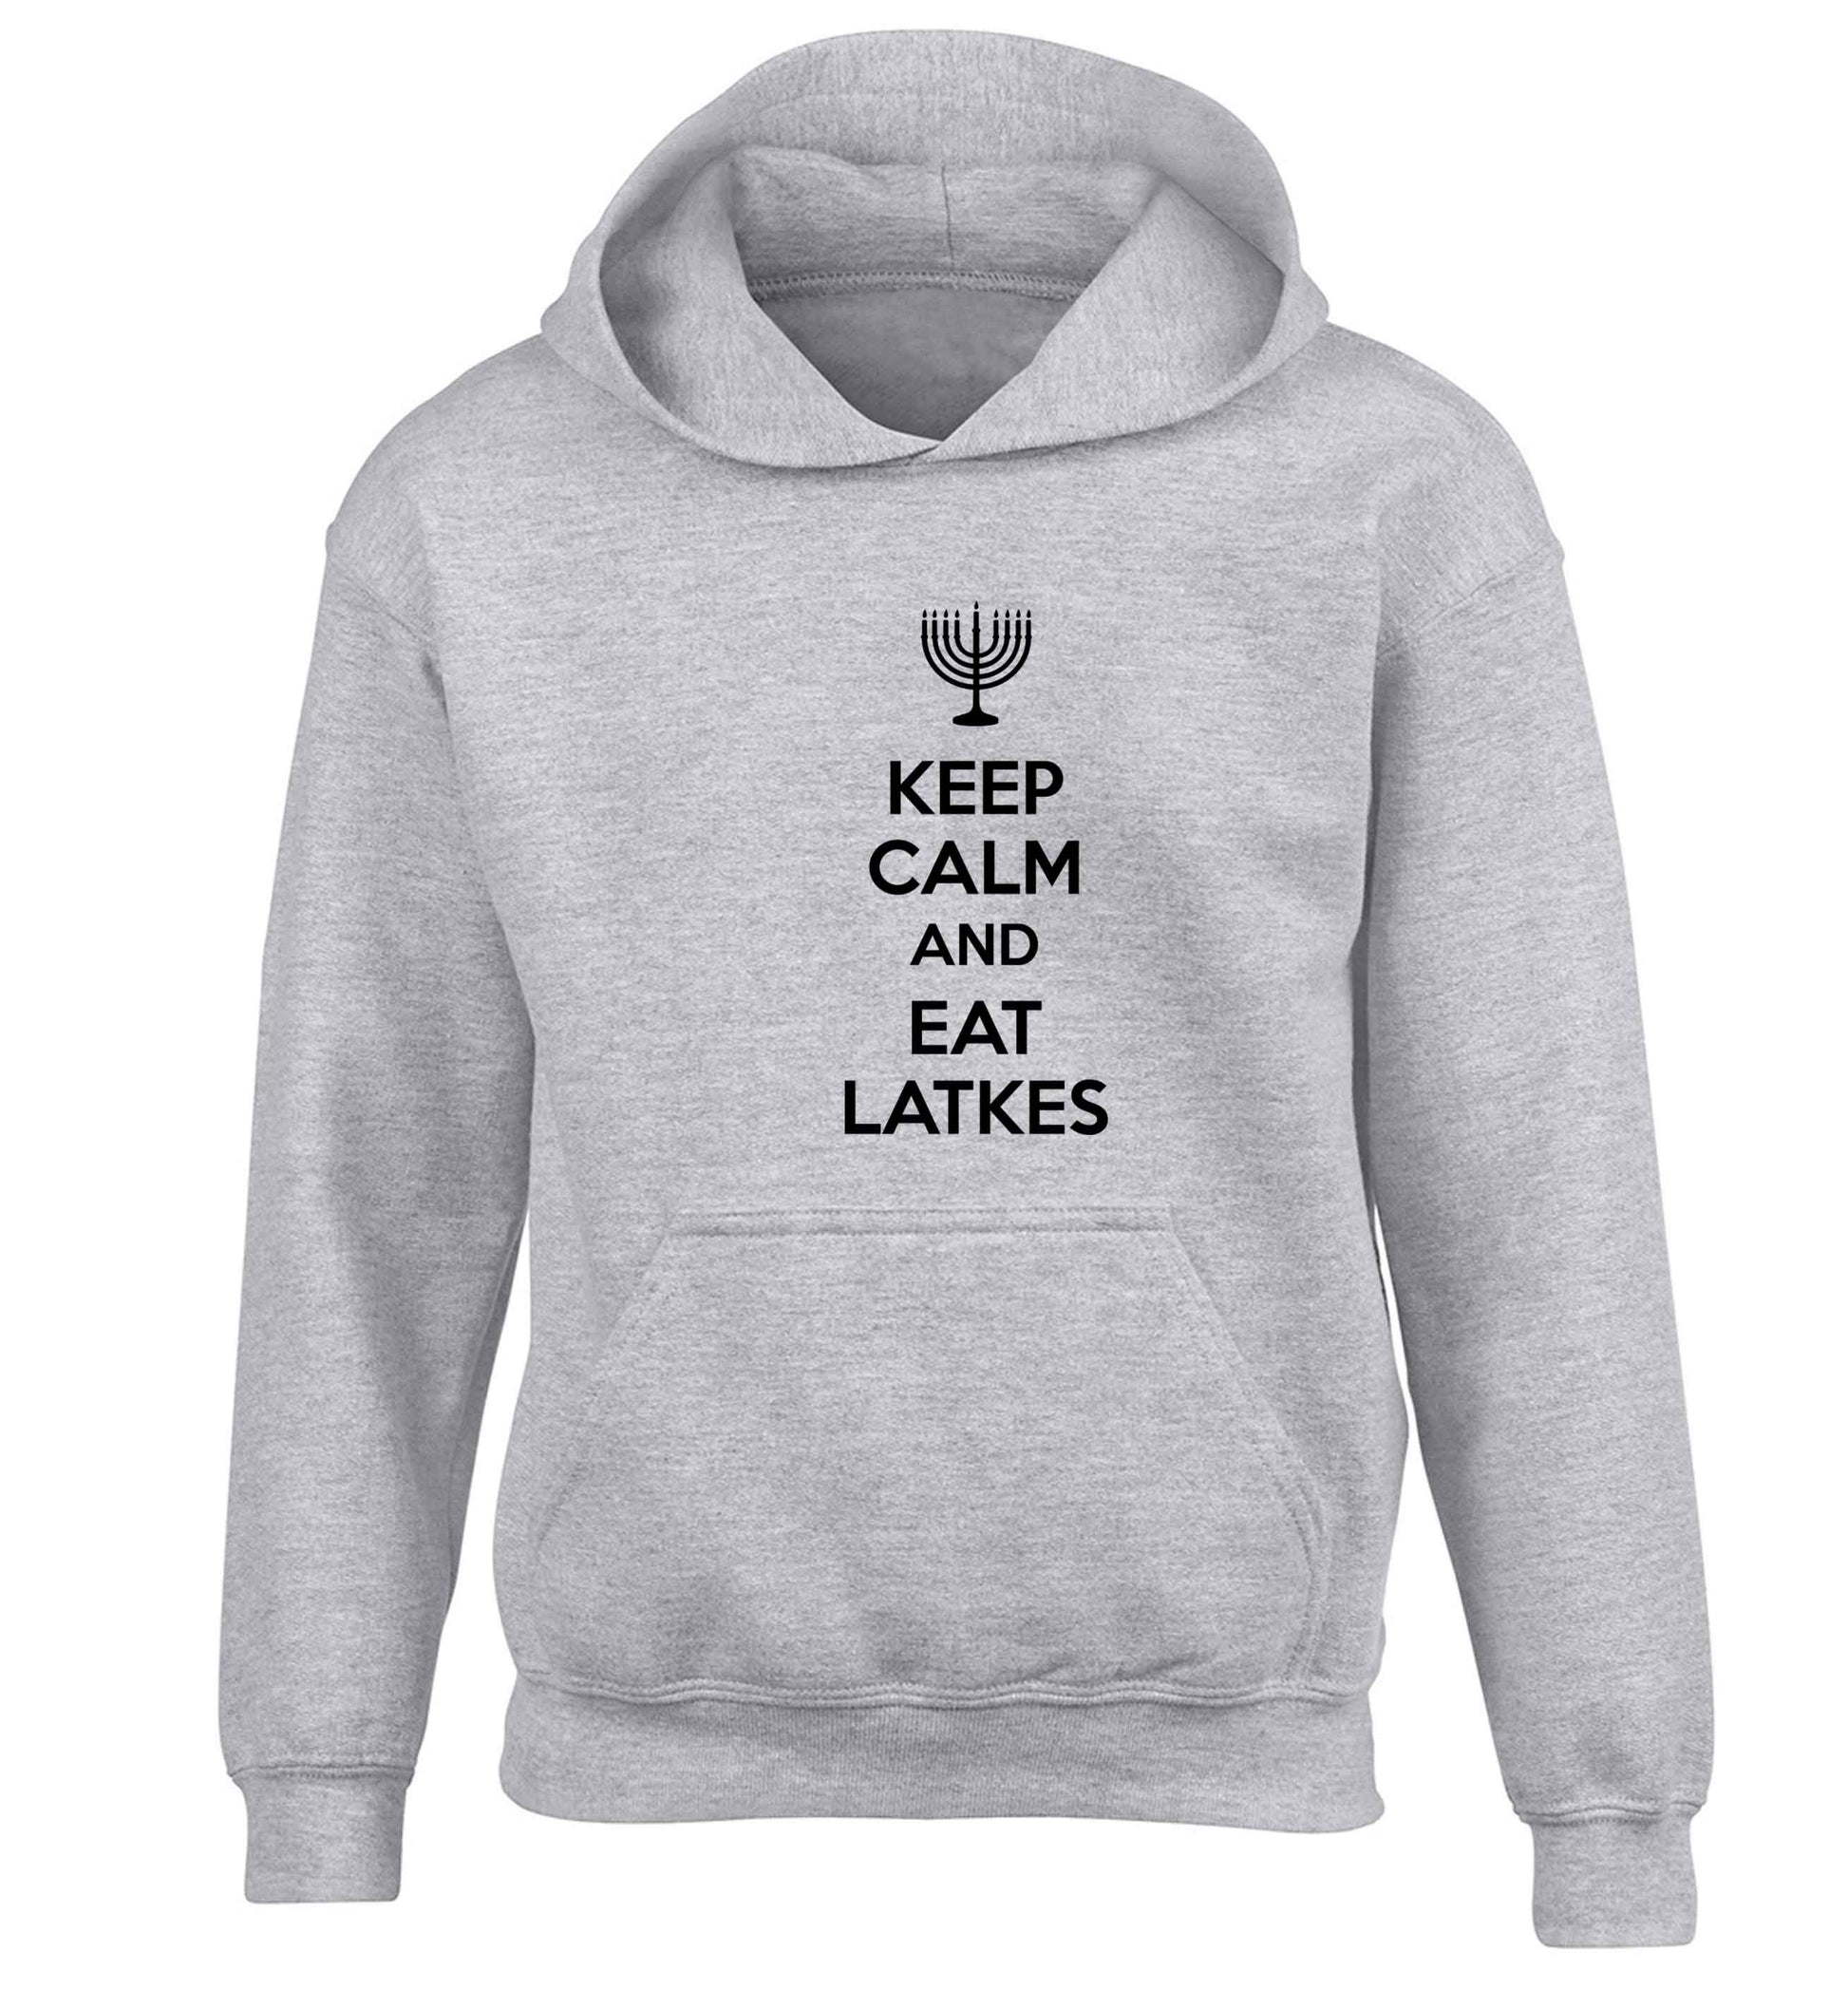 Keep calm and eat latkes children's grey hoodie 12-13 Years